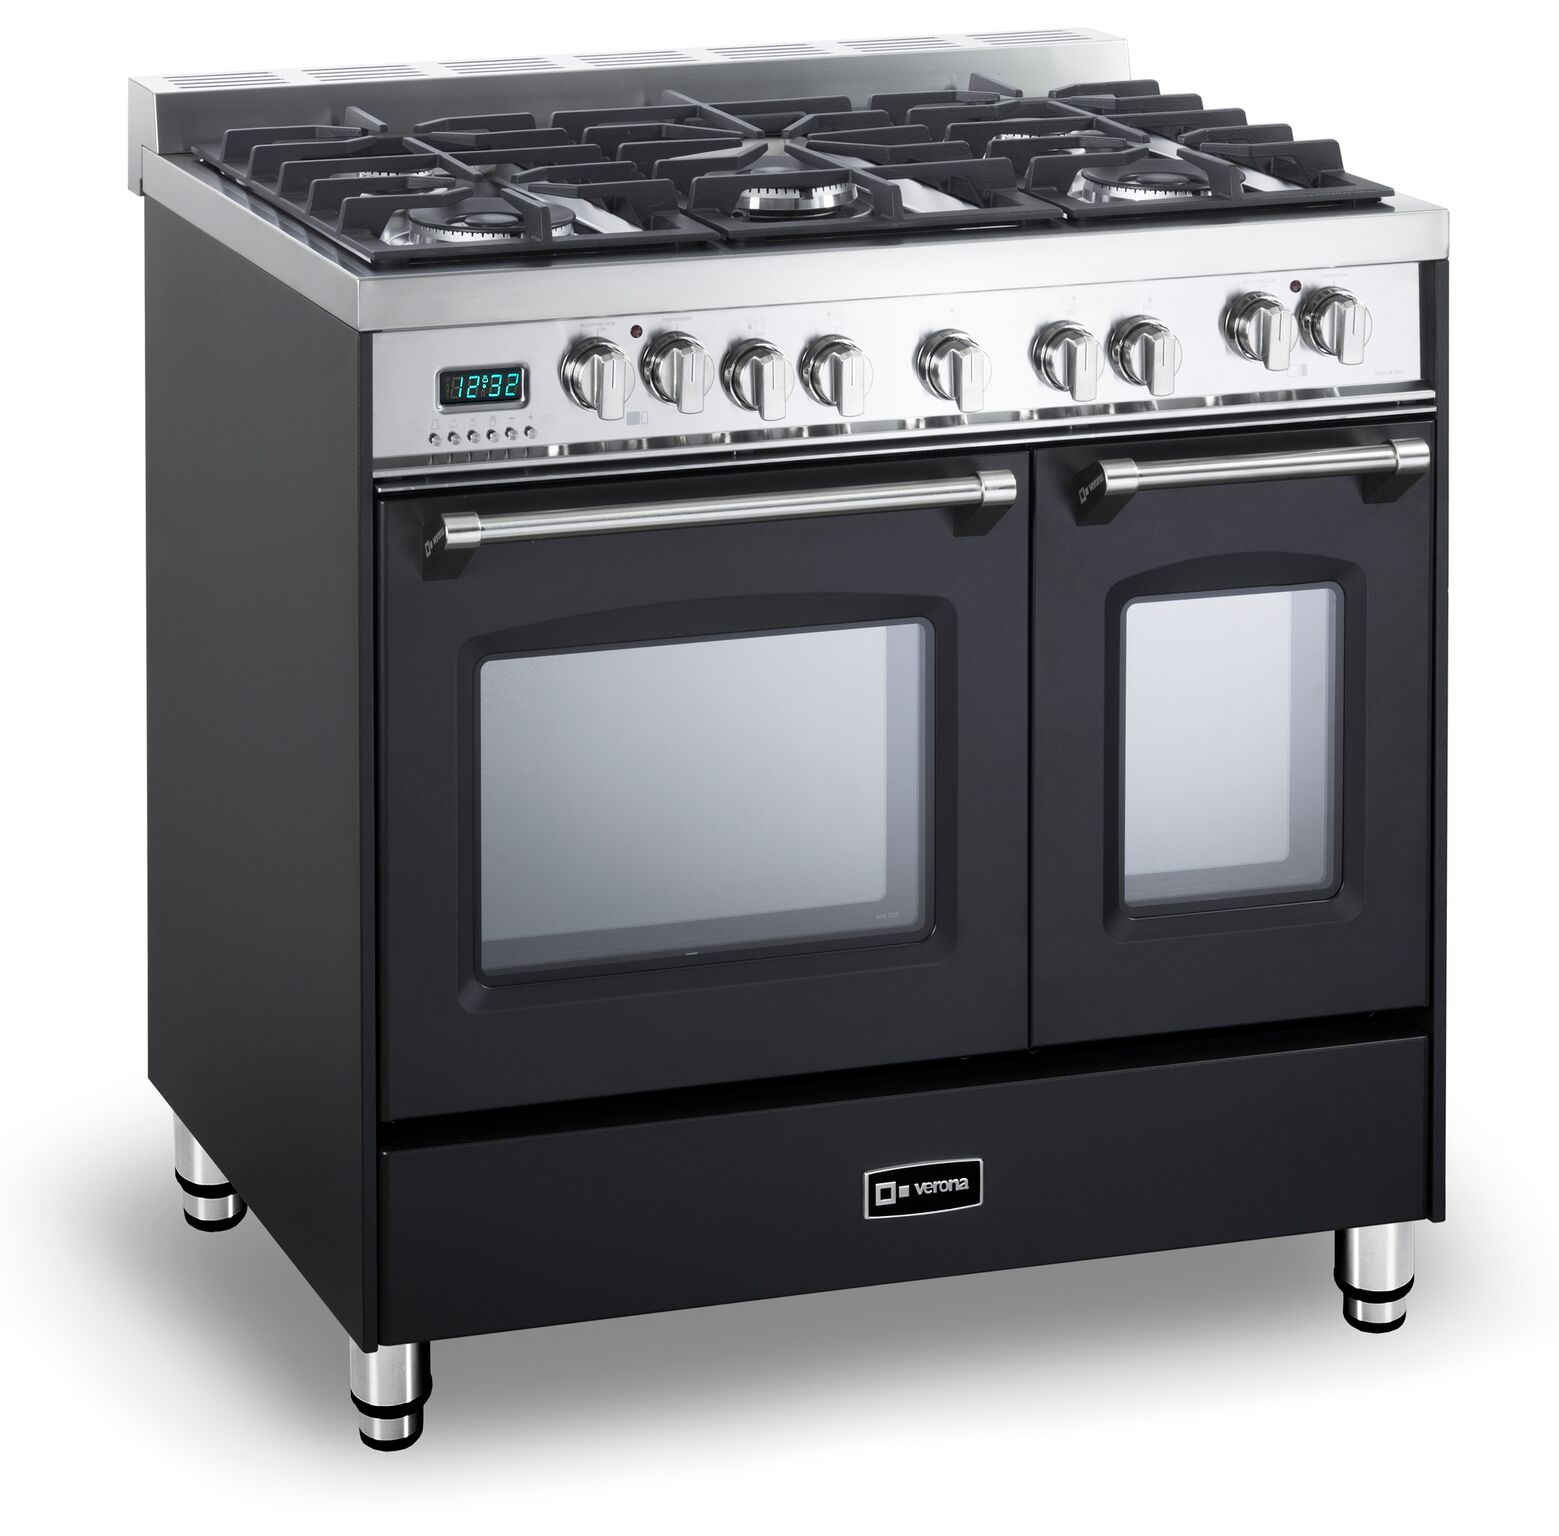 Verona Appliances Prestige Line high-powered Ovens Black